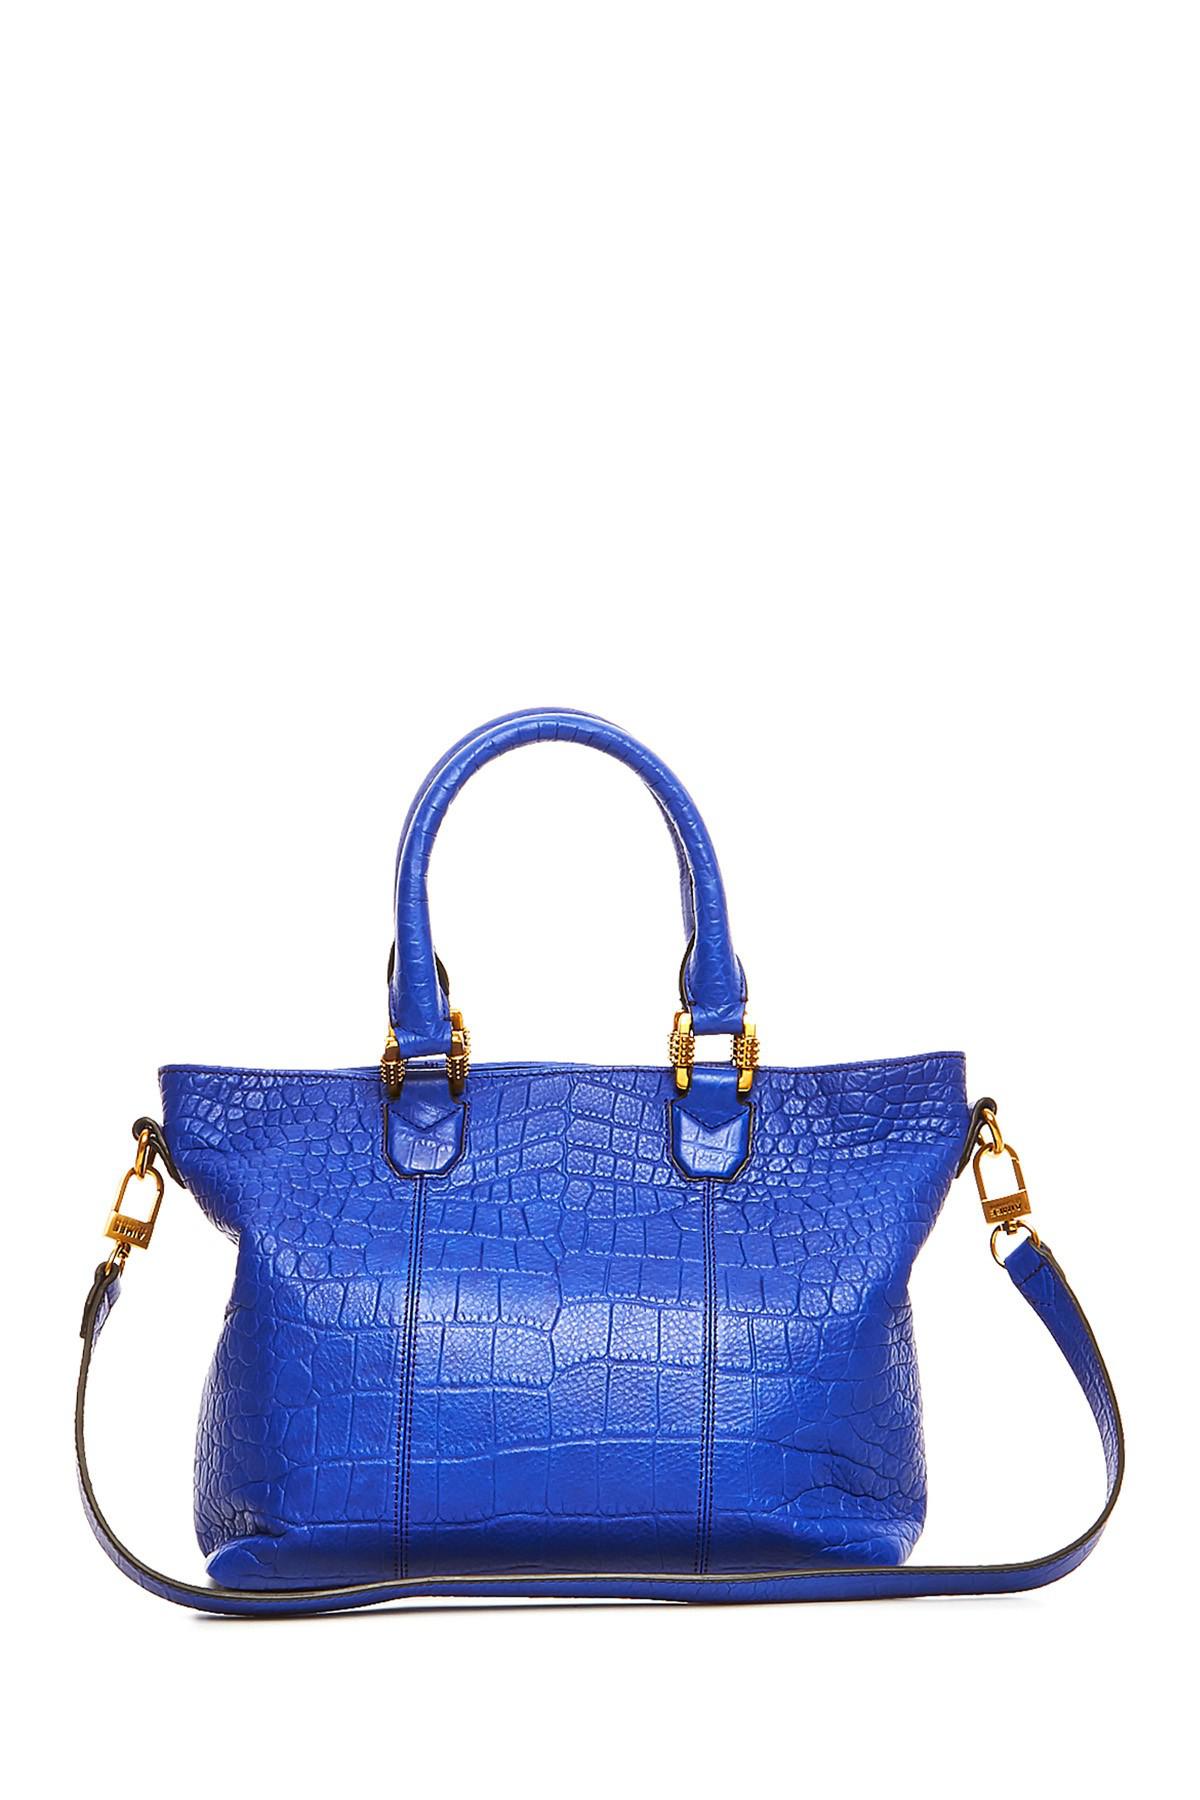 Aimee Kestenberg Morocco Genuine Leather Shoulder Bag in Amethyst (Blue) - Lyst